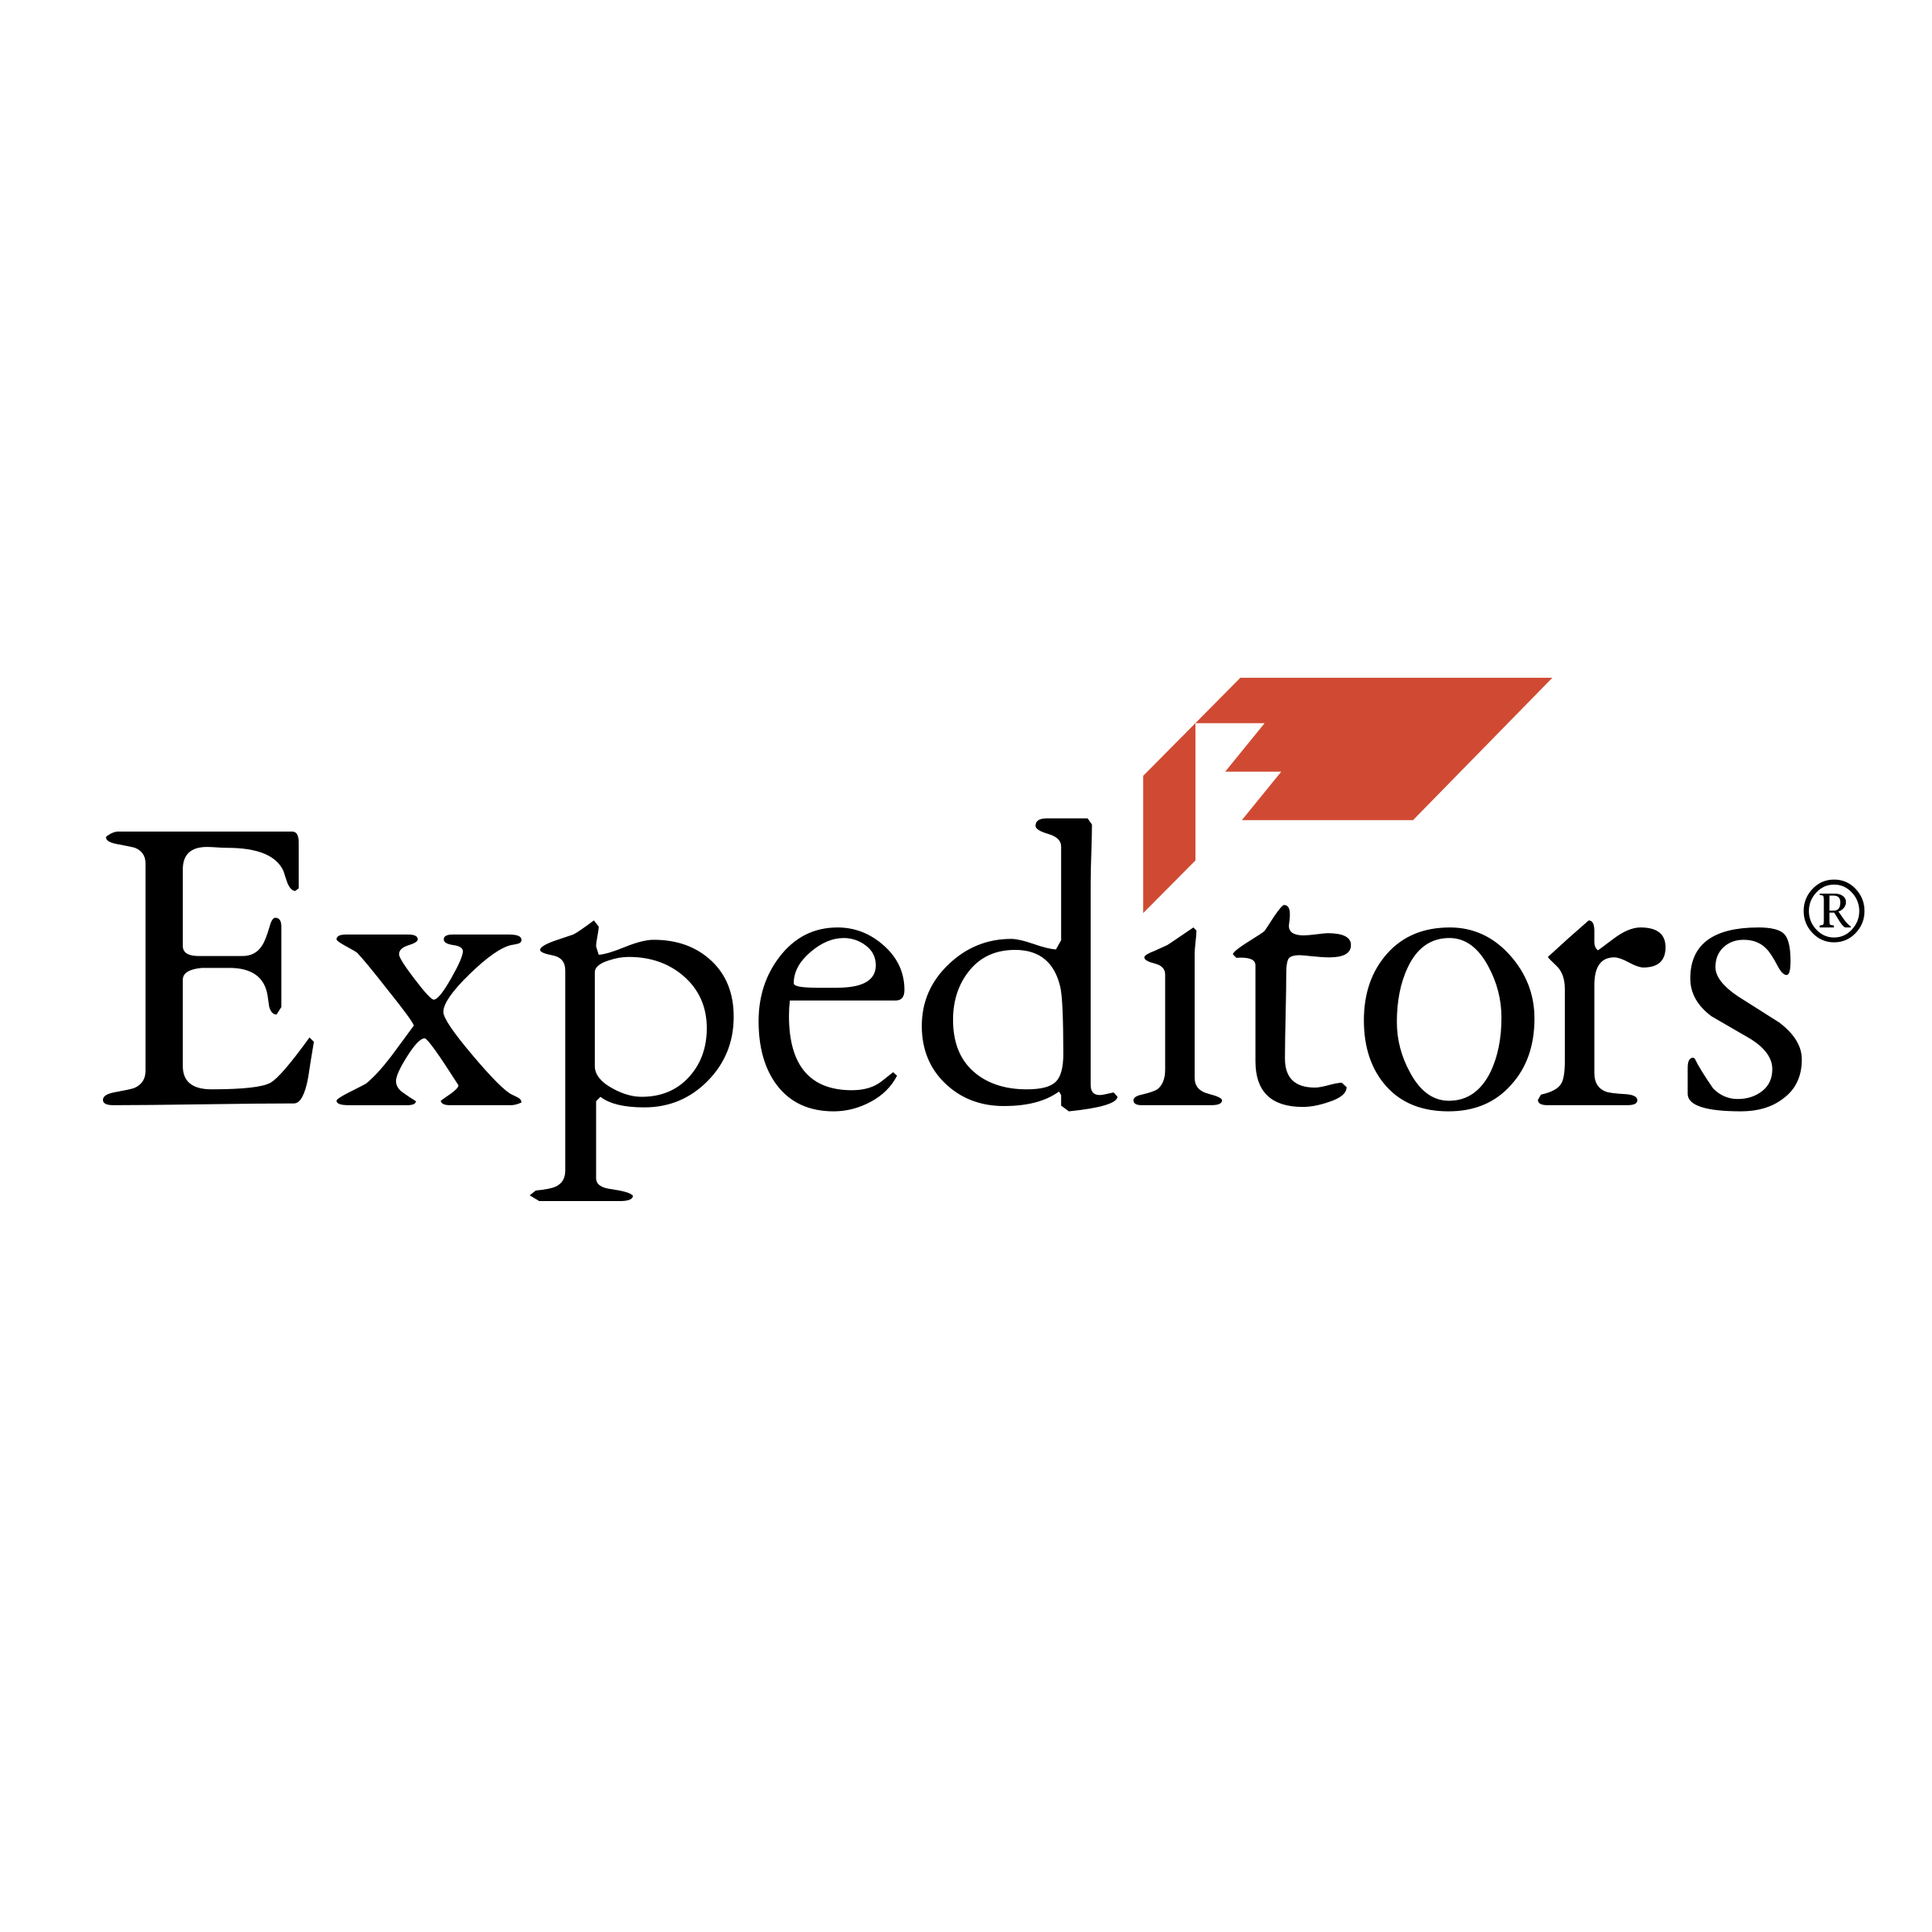 Expeditors Logo - Expeditors Logo PNG Transparent & SVG Vector - Freebie Supply